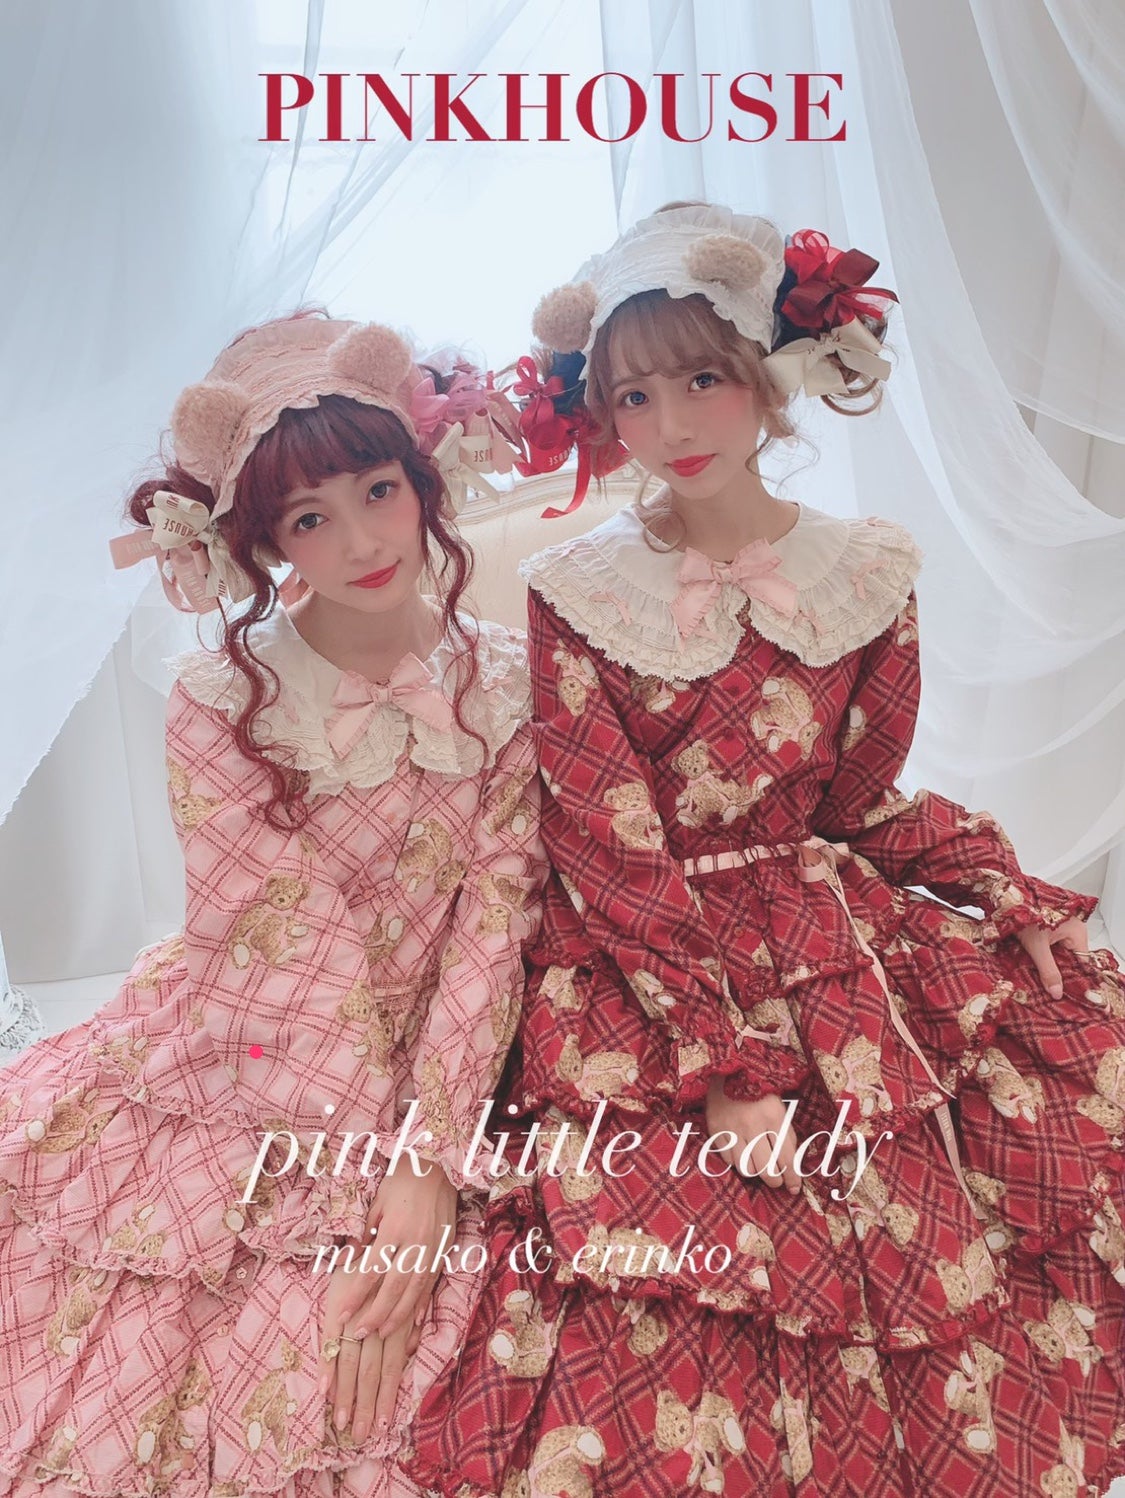 PINK HOUSEコラボ発売スタート | 青木美沙子オフィシャルブログ